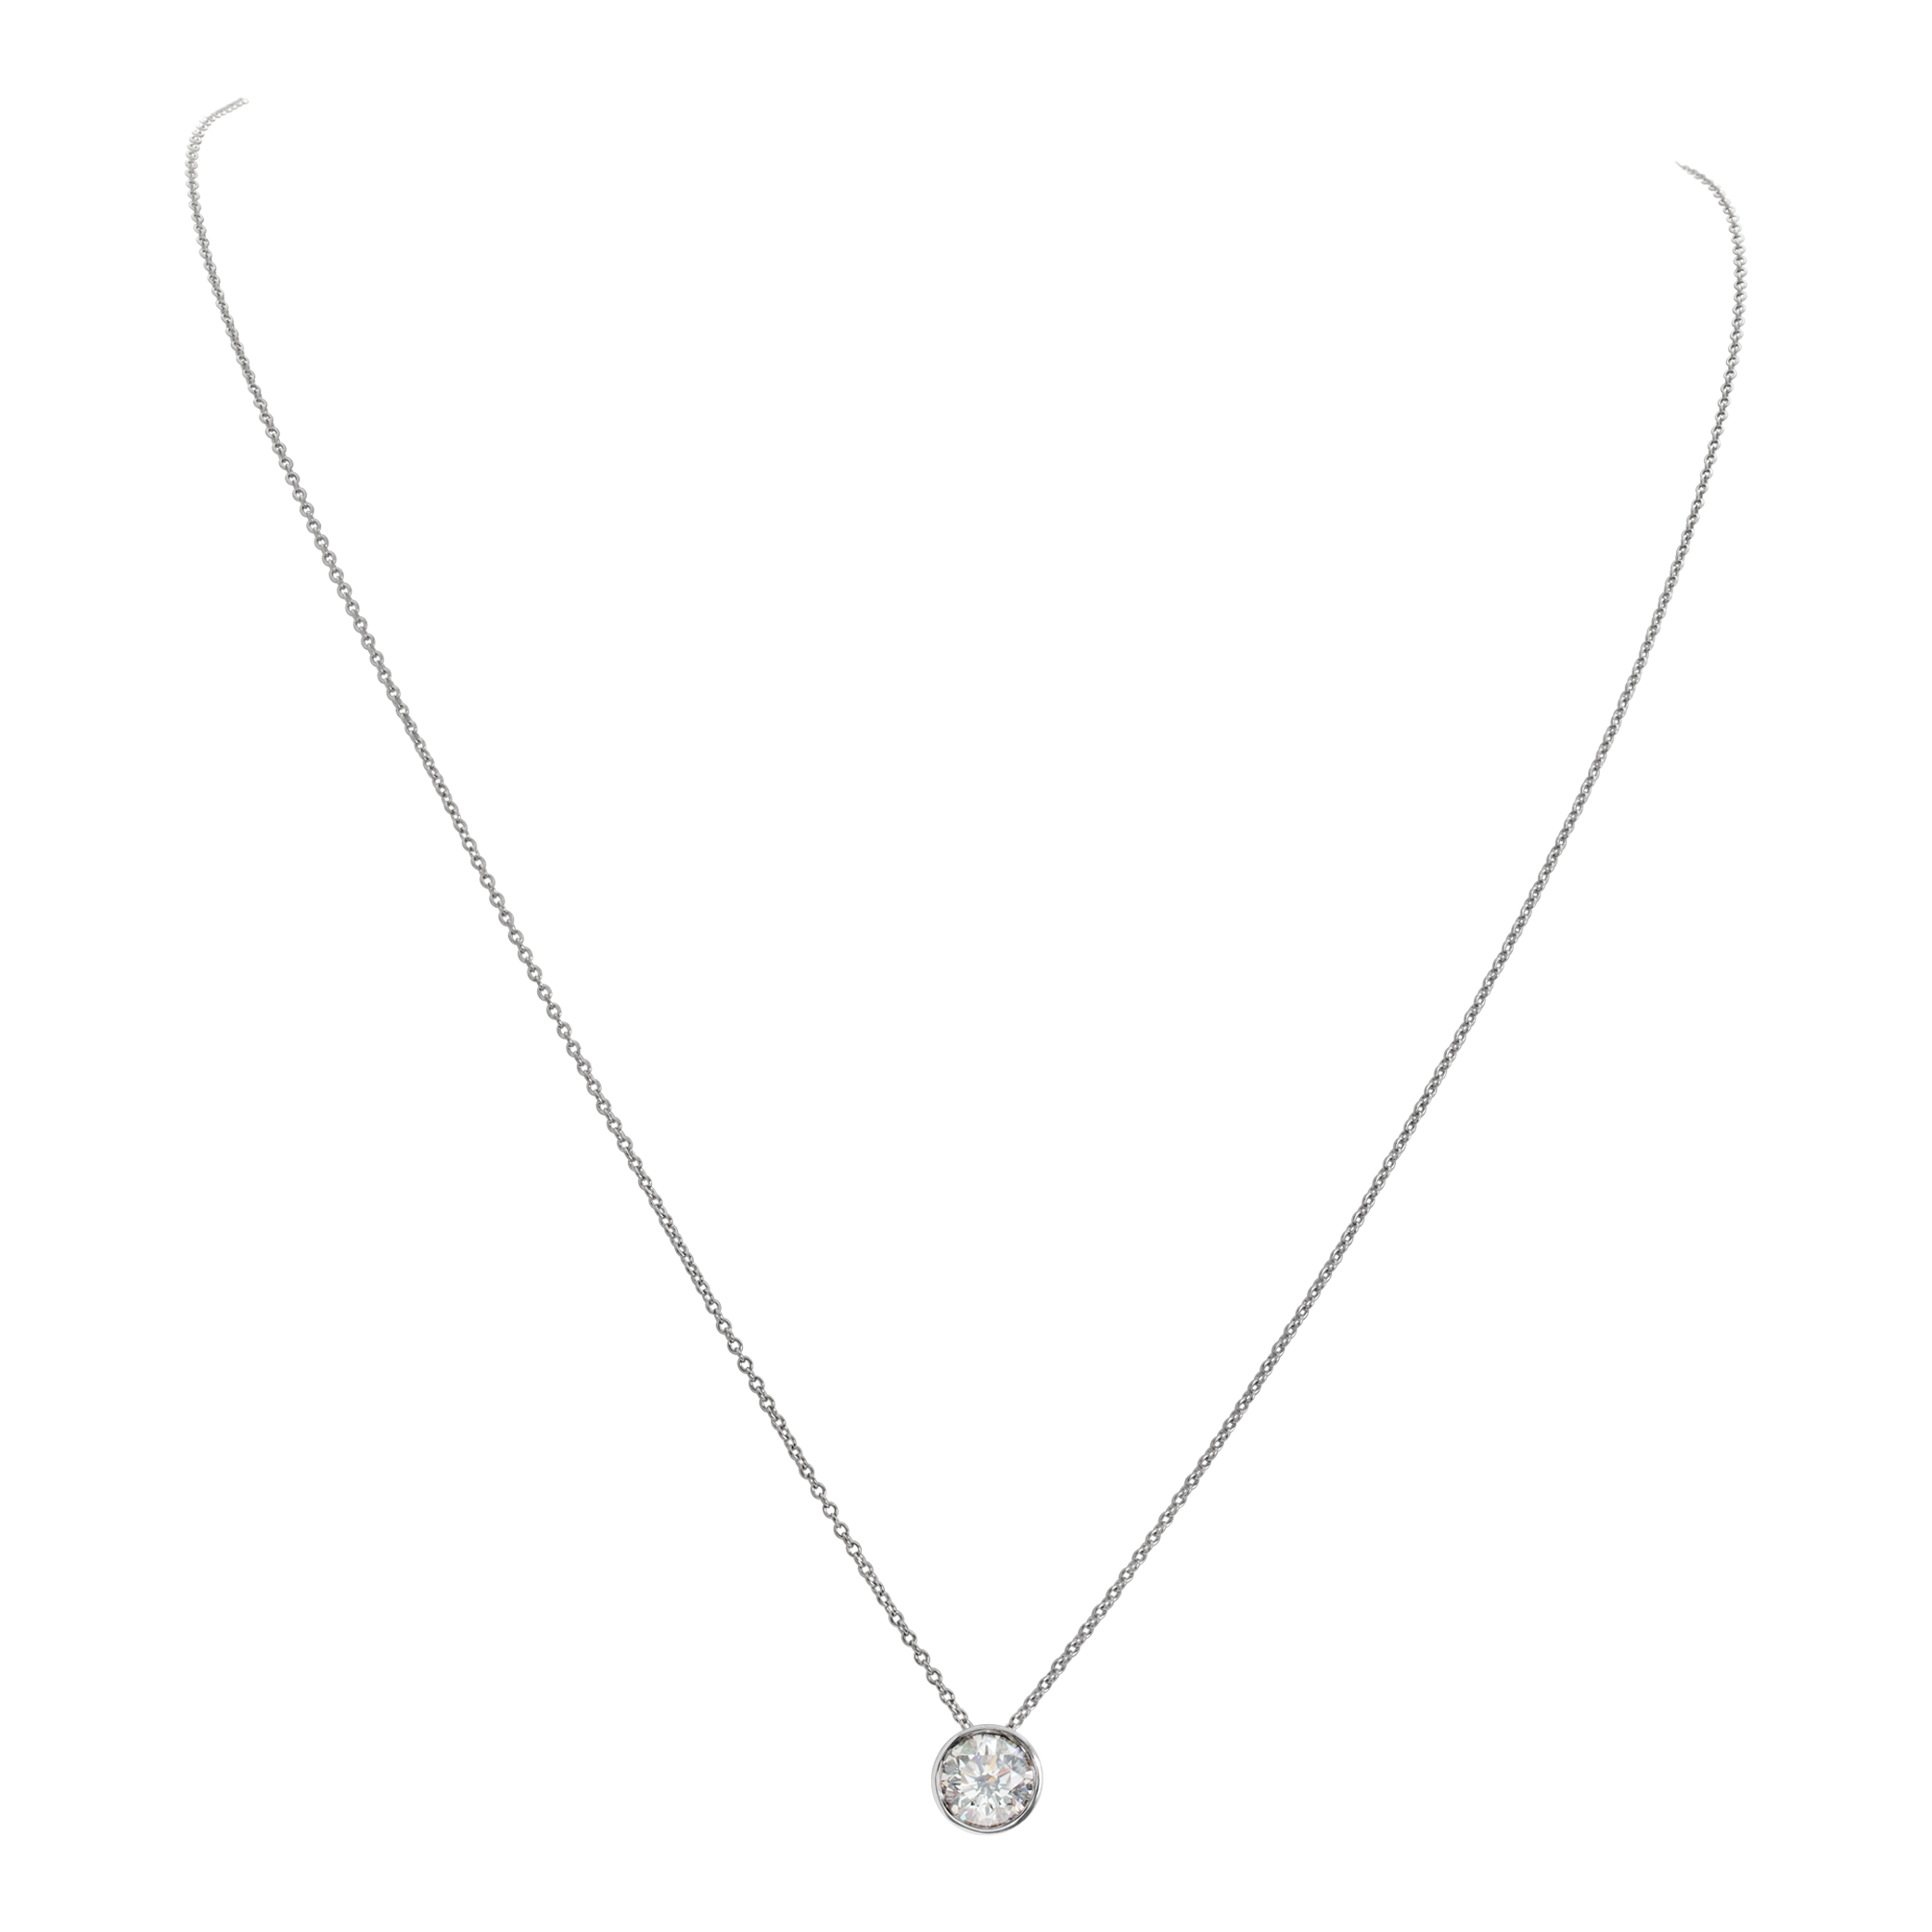 GIA certified 1.02 carat (J color, VS2 clarity) bezel set diamond pendant necklace in 18k white gold